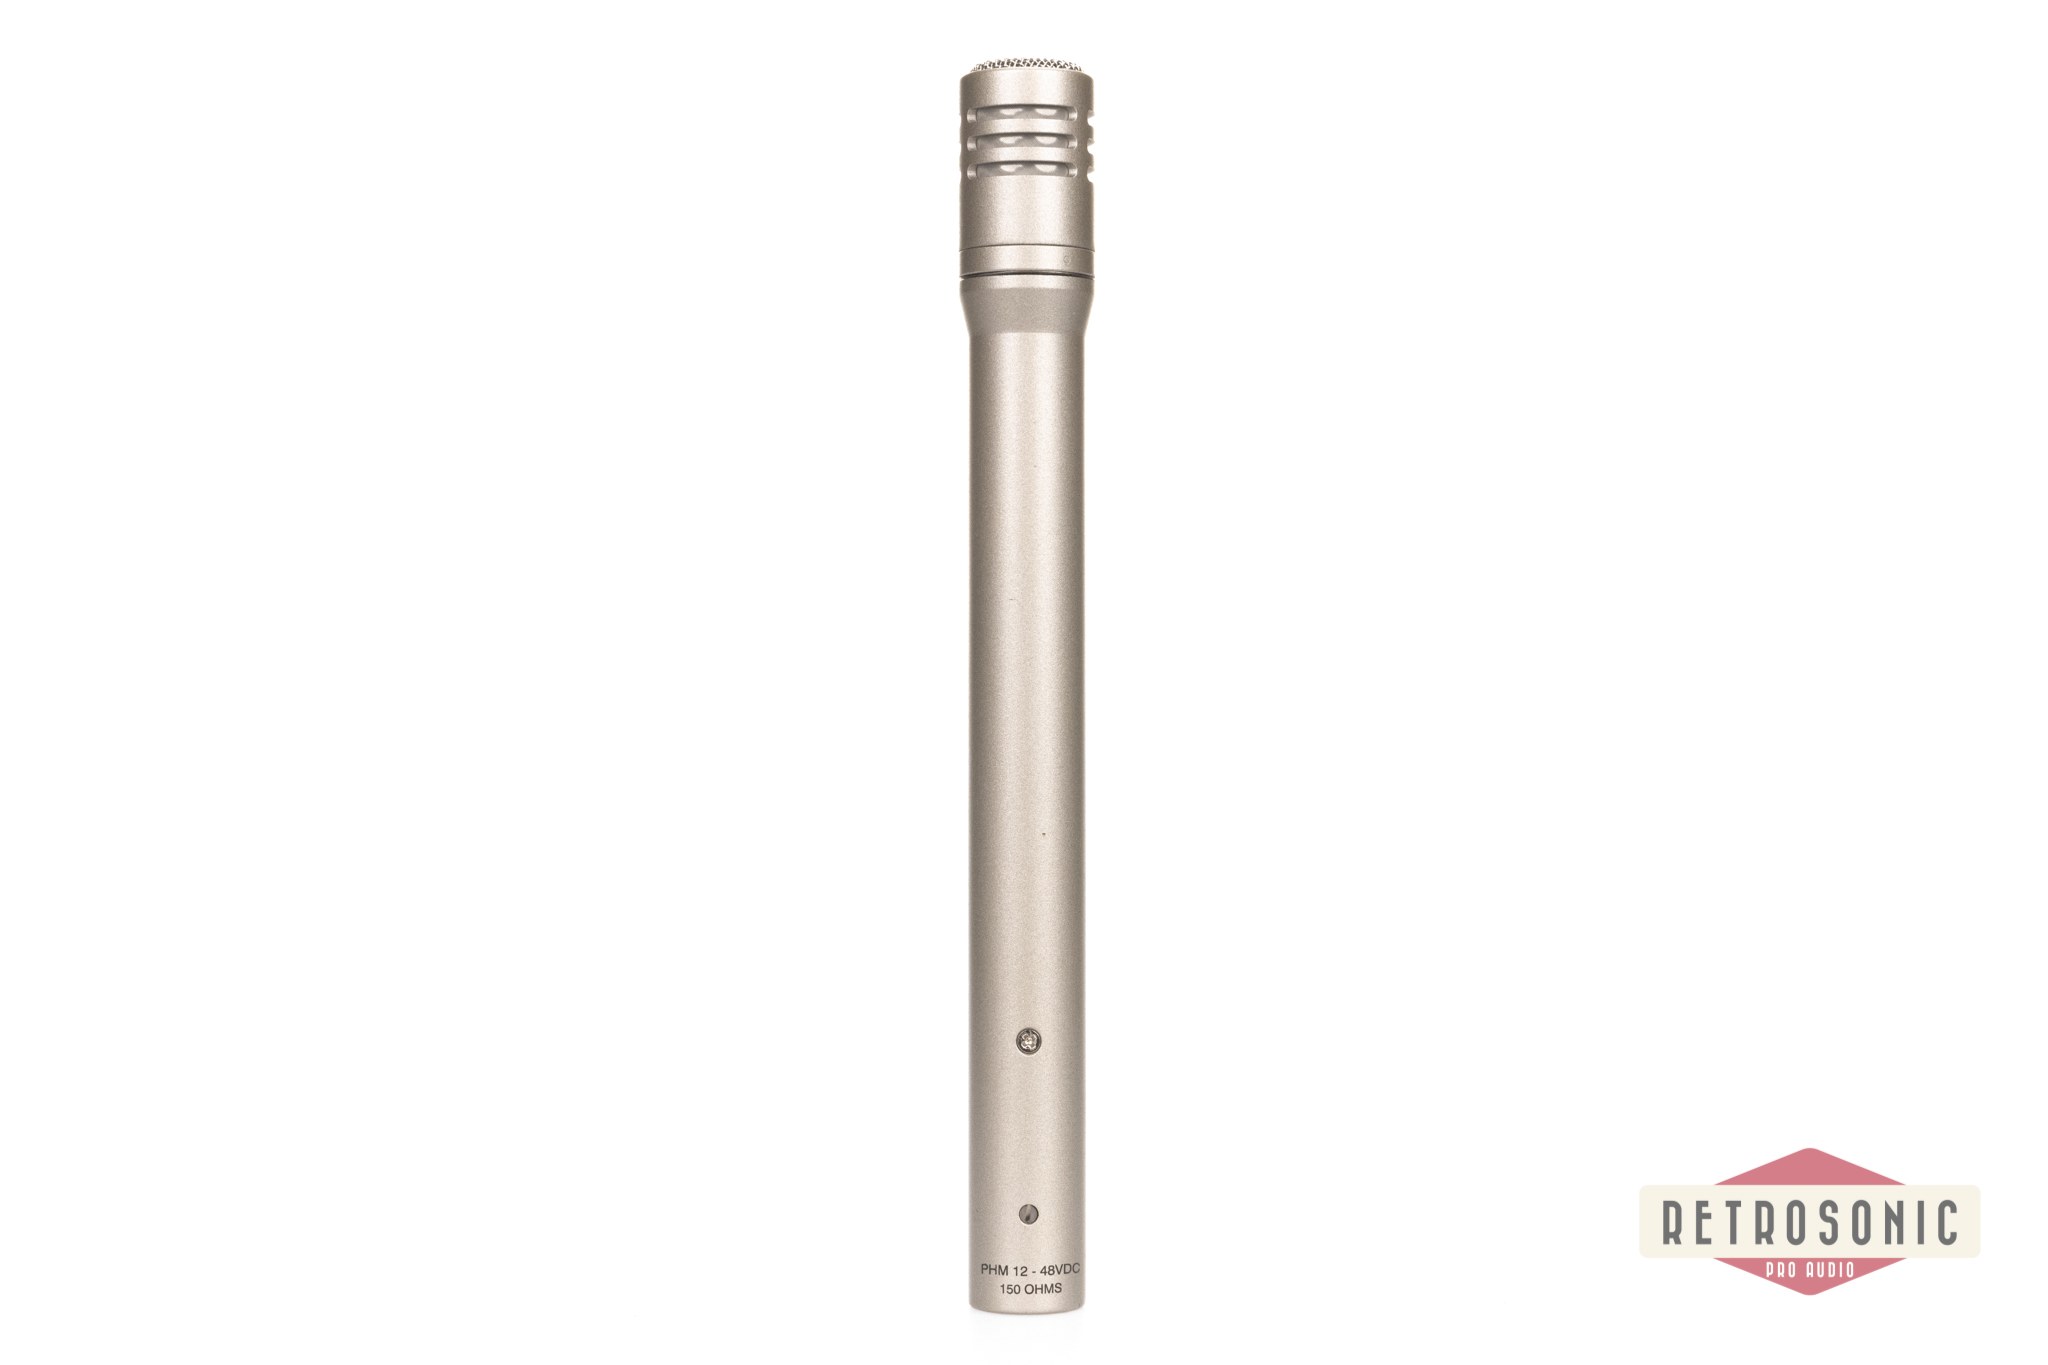 Shure SM-81-LC Condenser Microphone #3